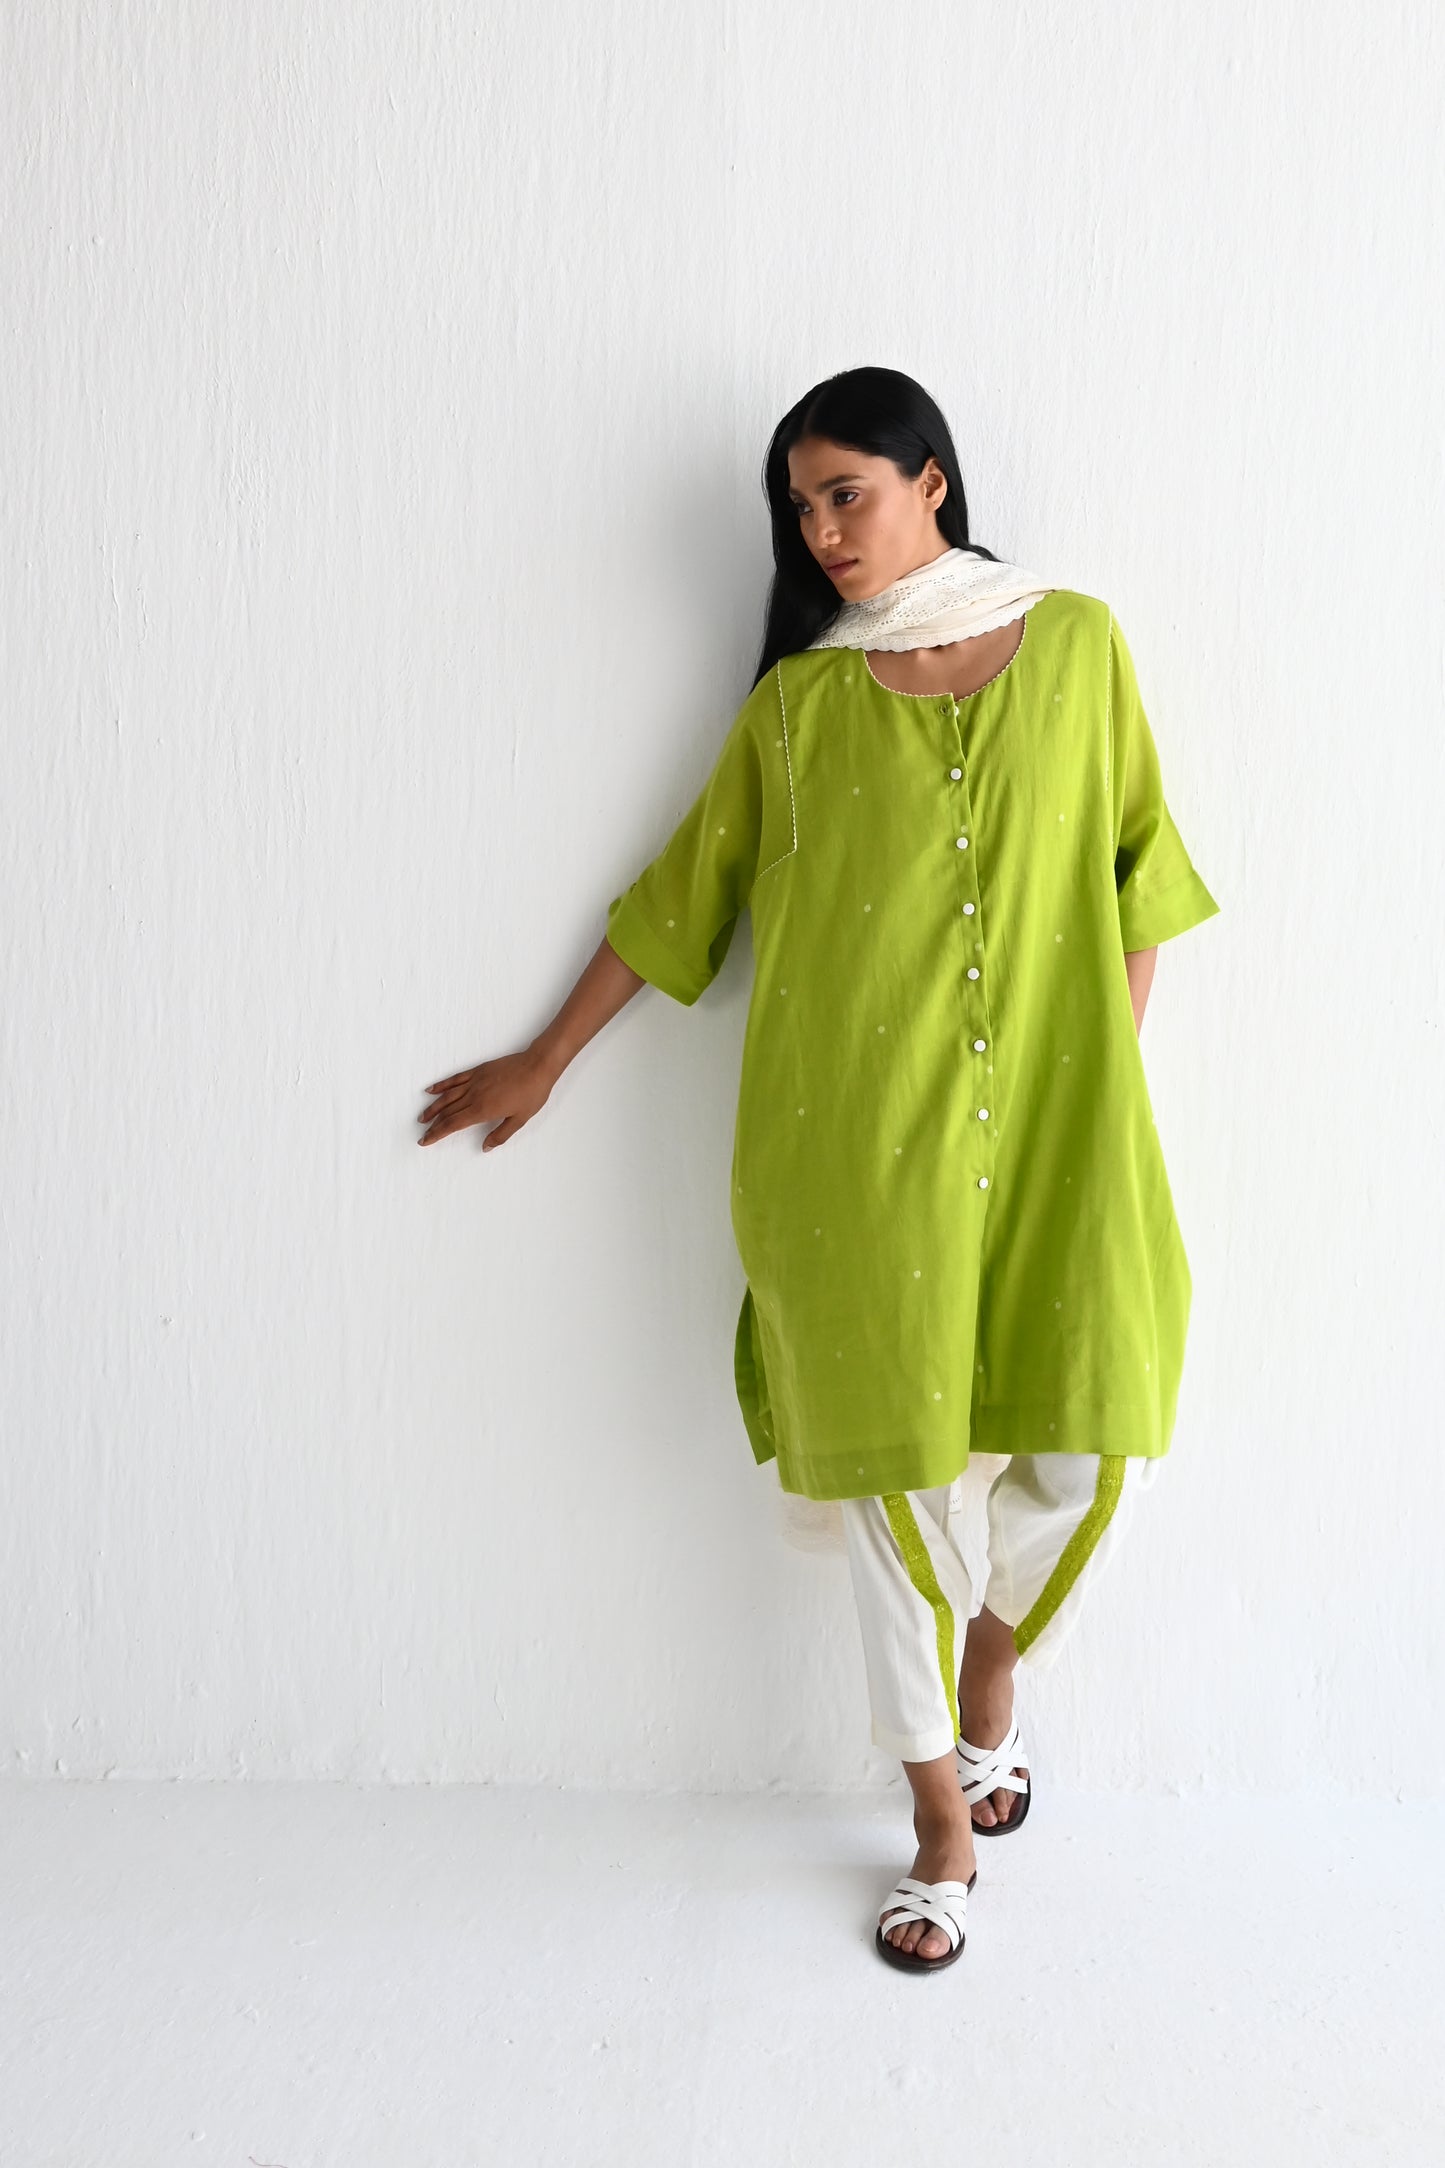 Choga Shirt in Lime Green Jamdani with Salwar